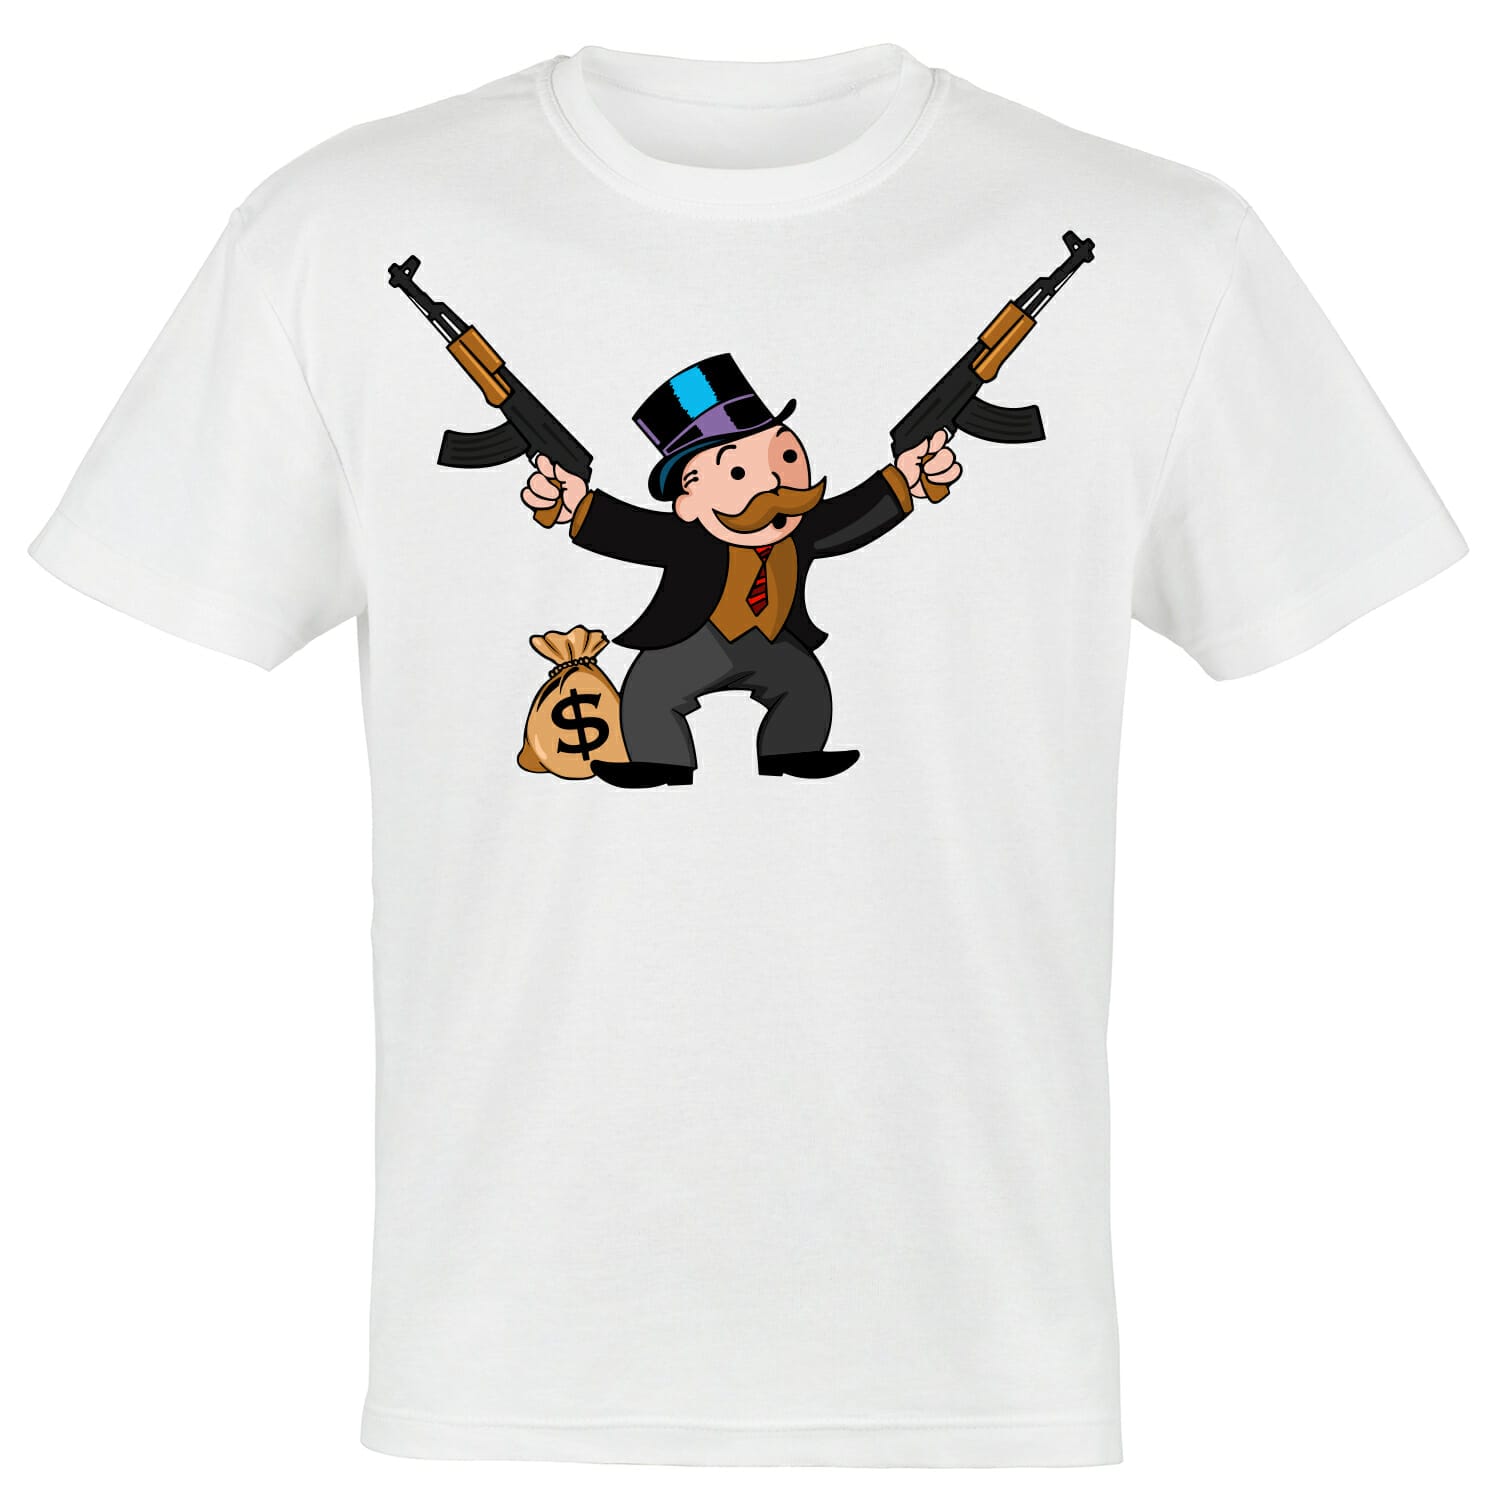 Funny Robber Tshirt Design